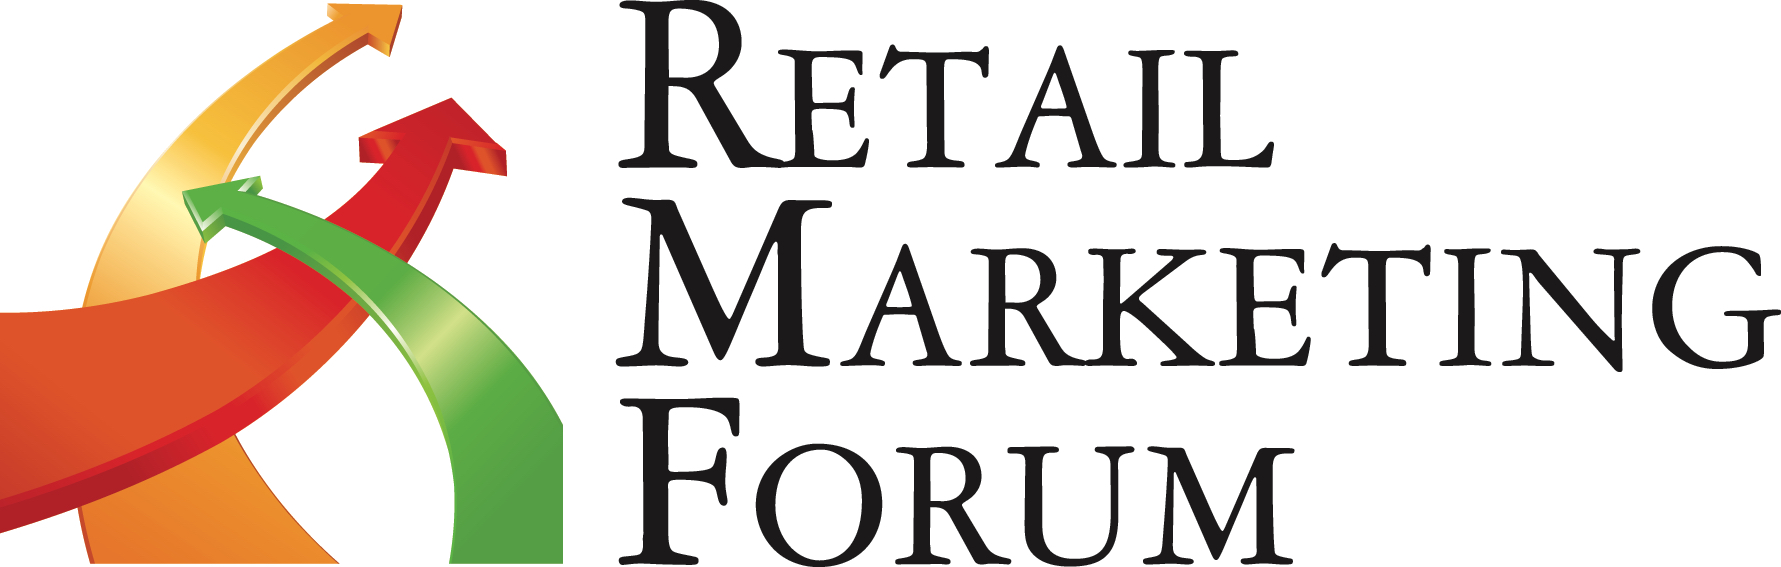 Retail Marketing Forum